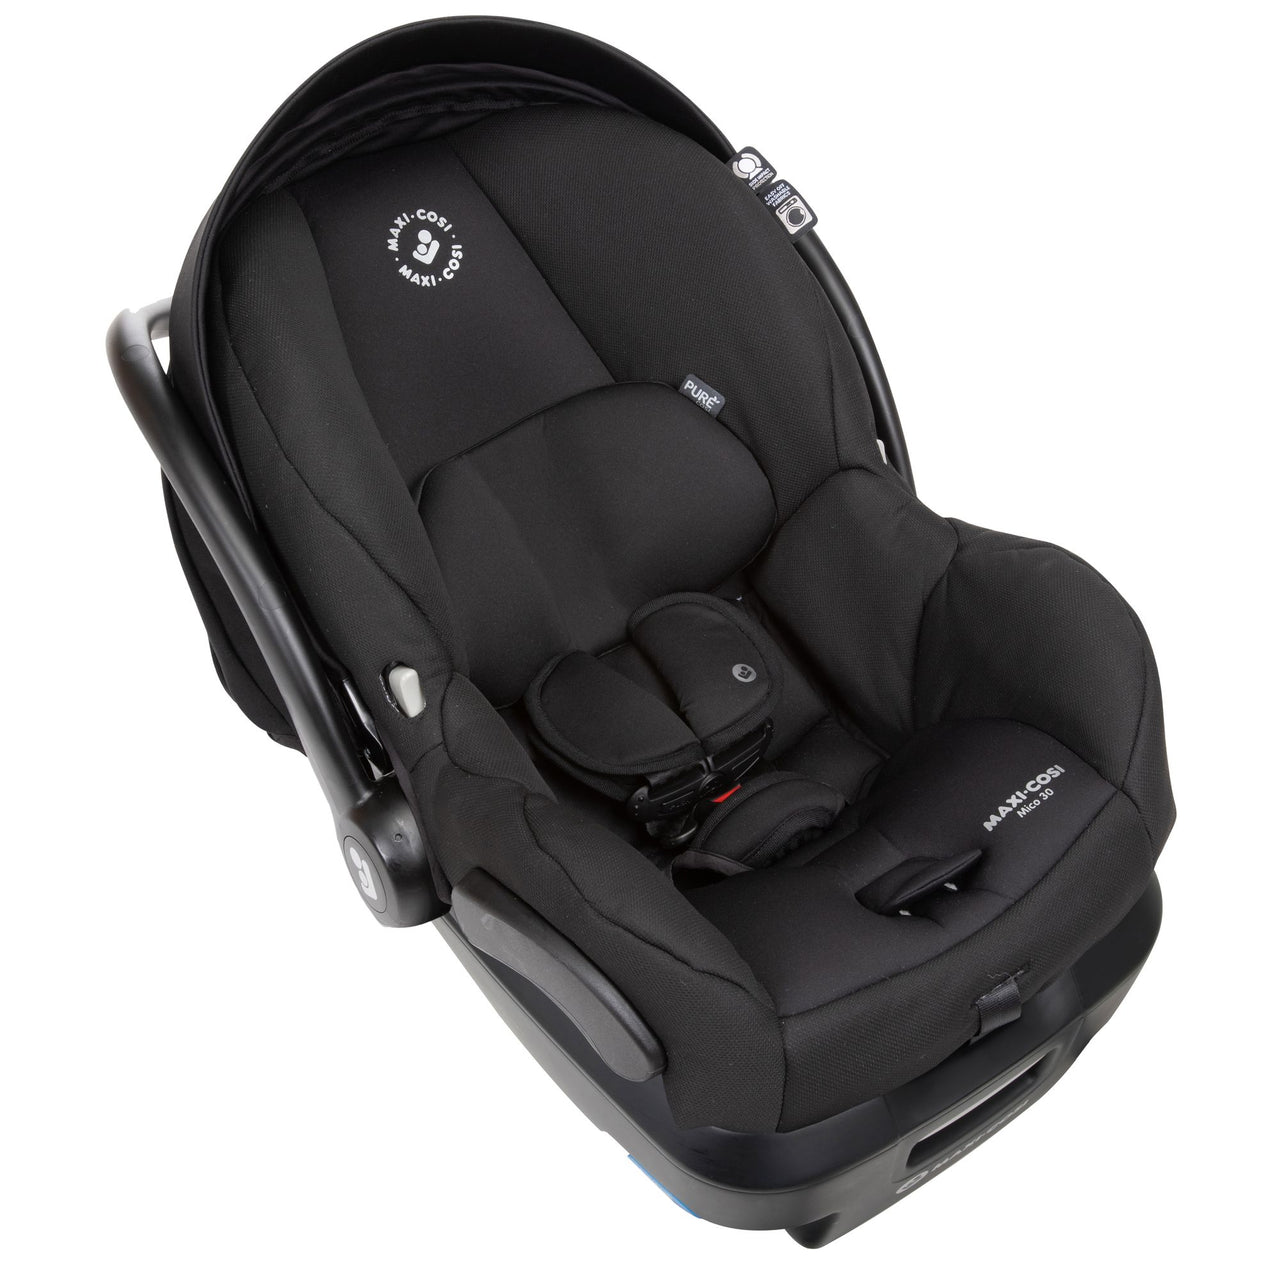 MAXI COSI Mico 30 Infant Car Seat